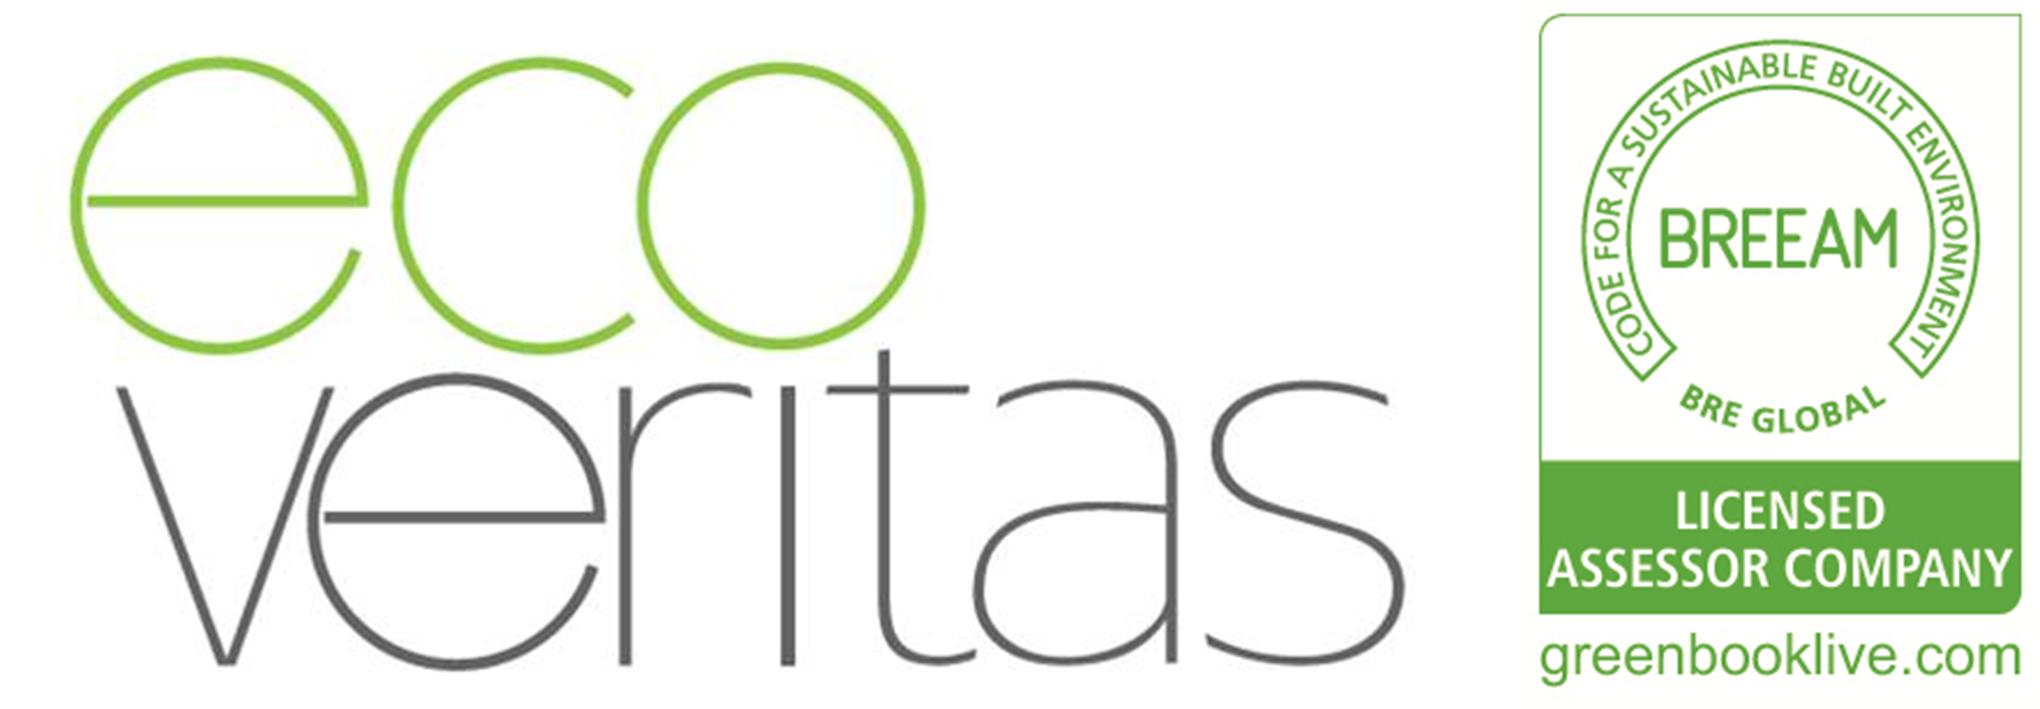 ECOVERITAS OE logo